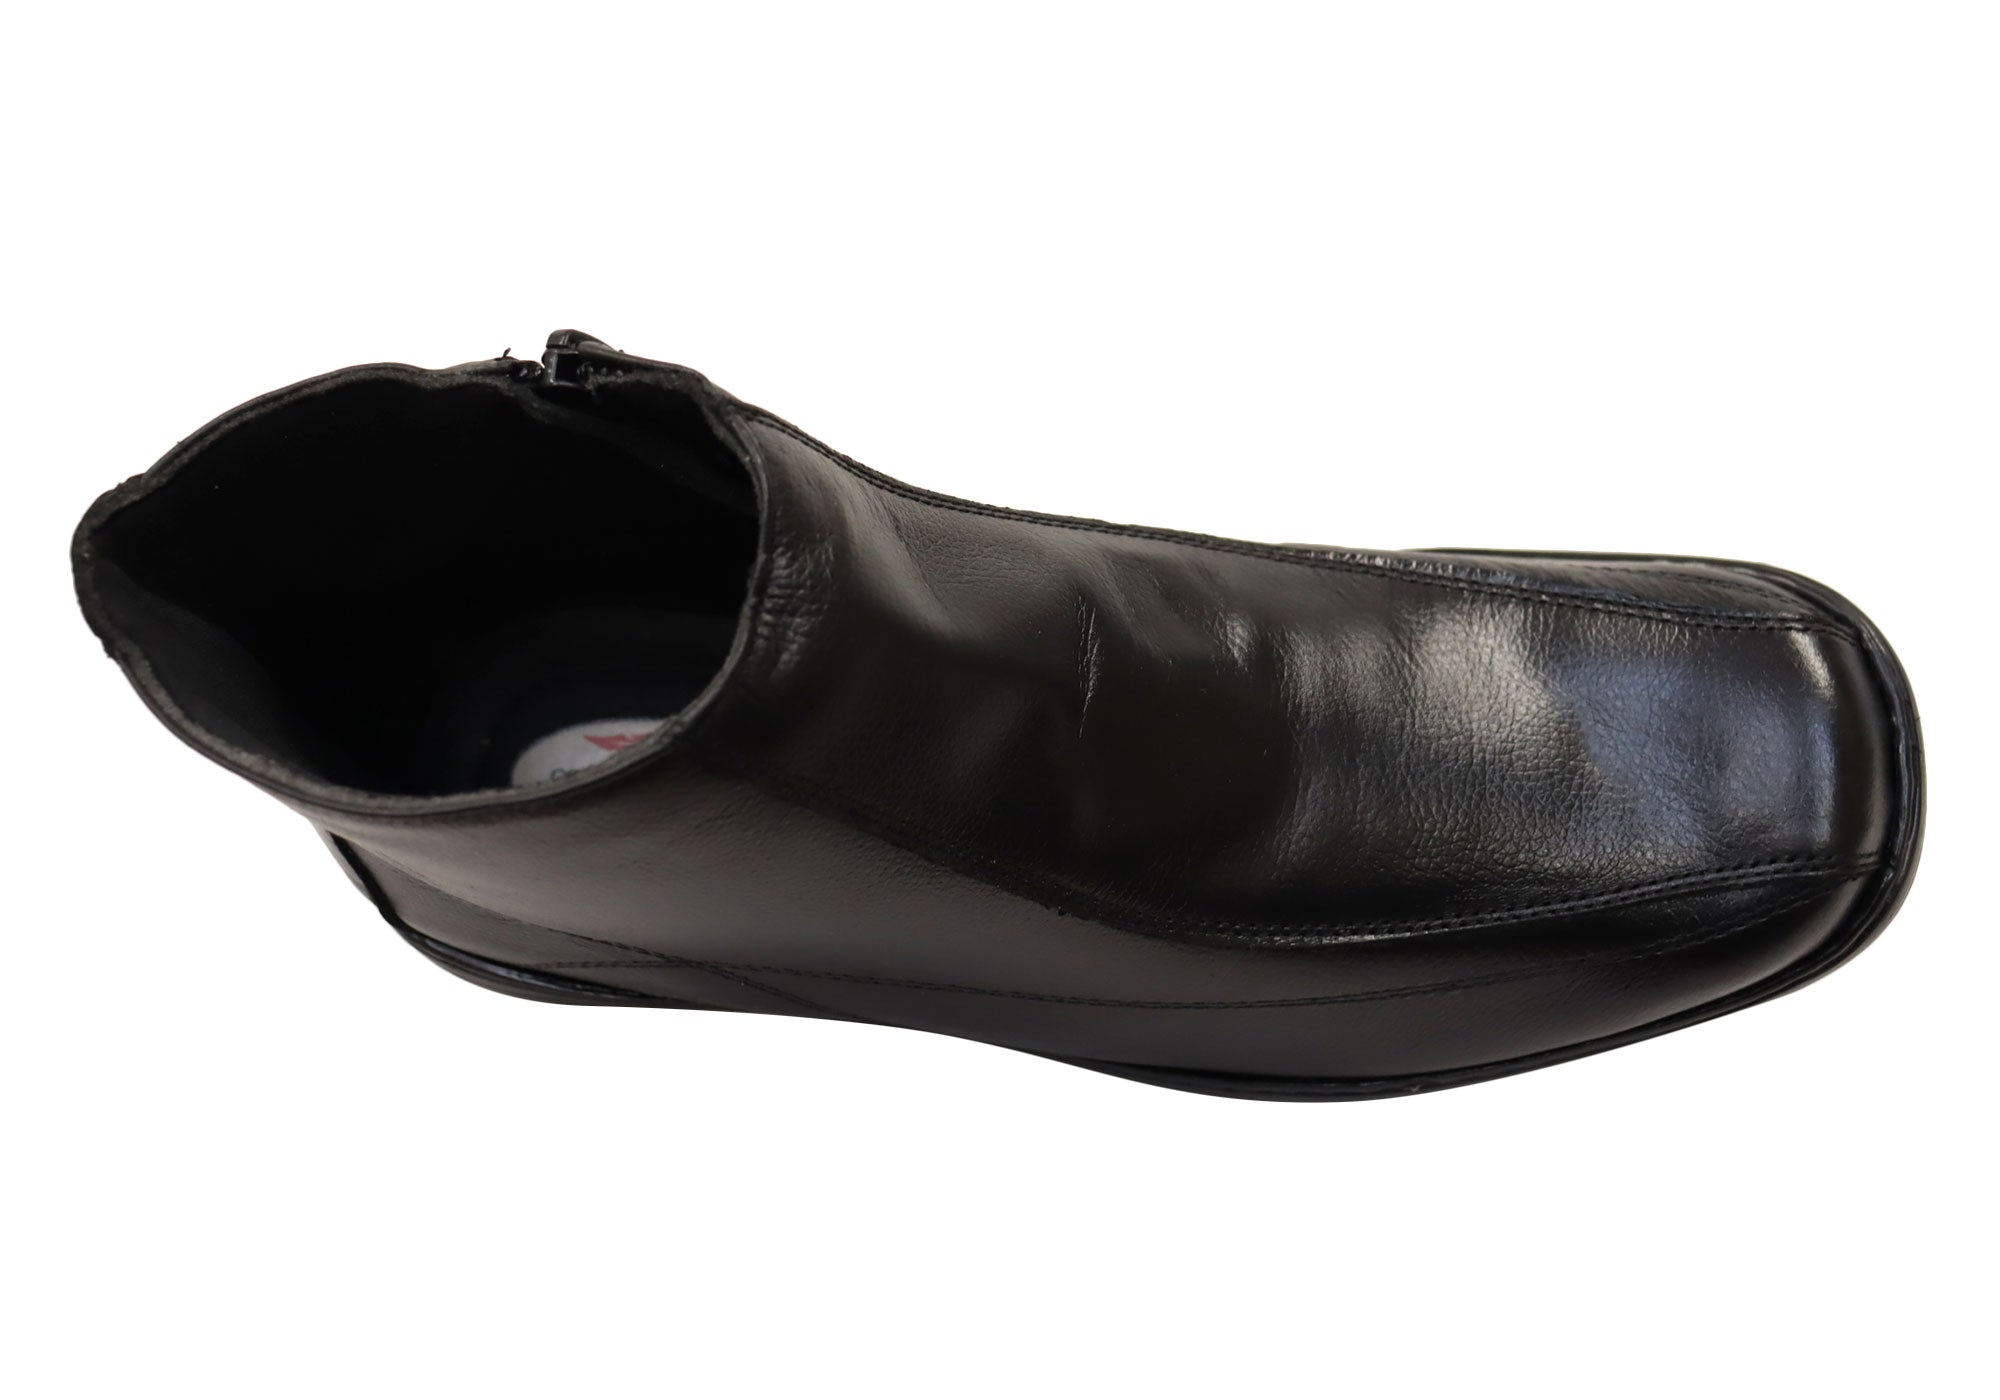 Mironneli Nancy Womens Comfortable Brazilian Leather Ankle Boots